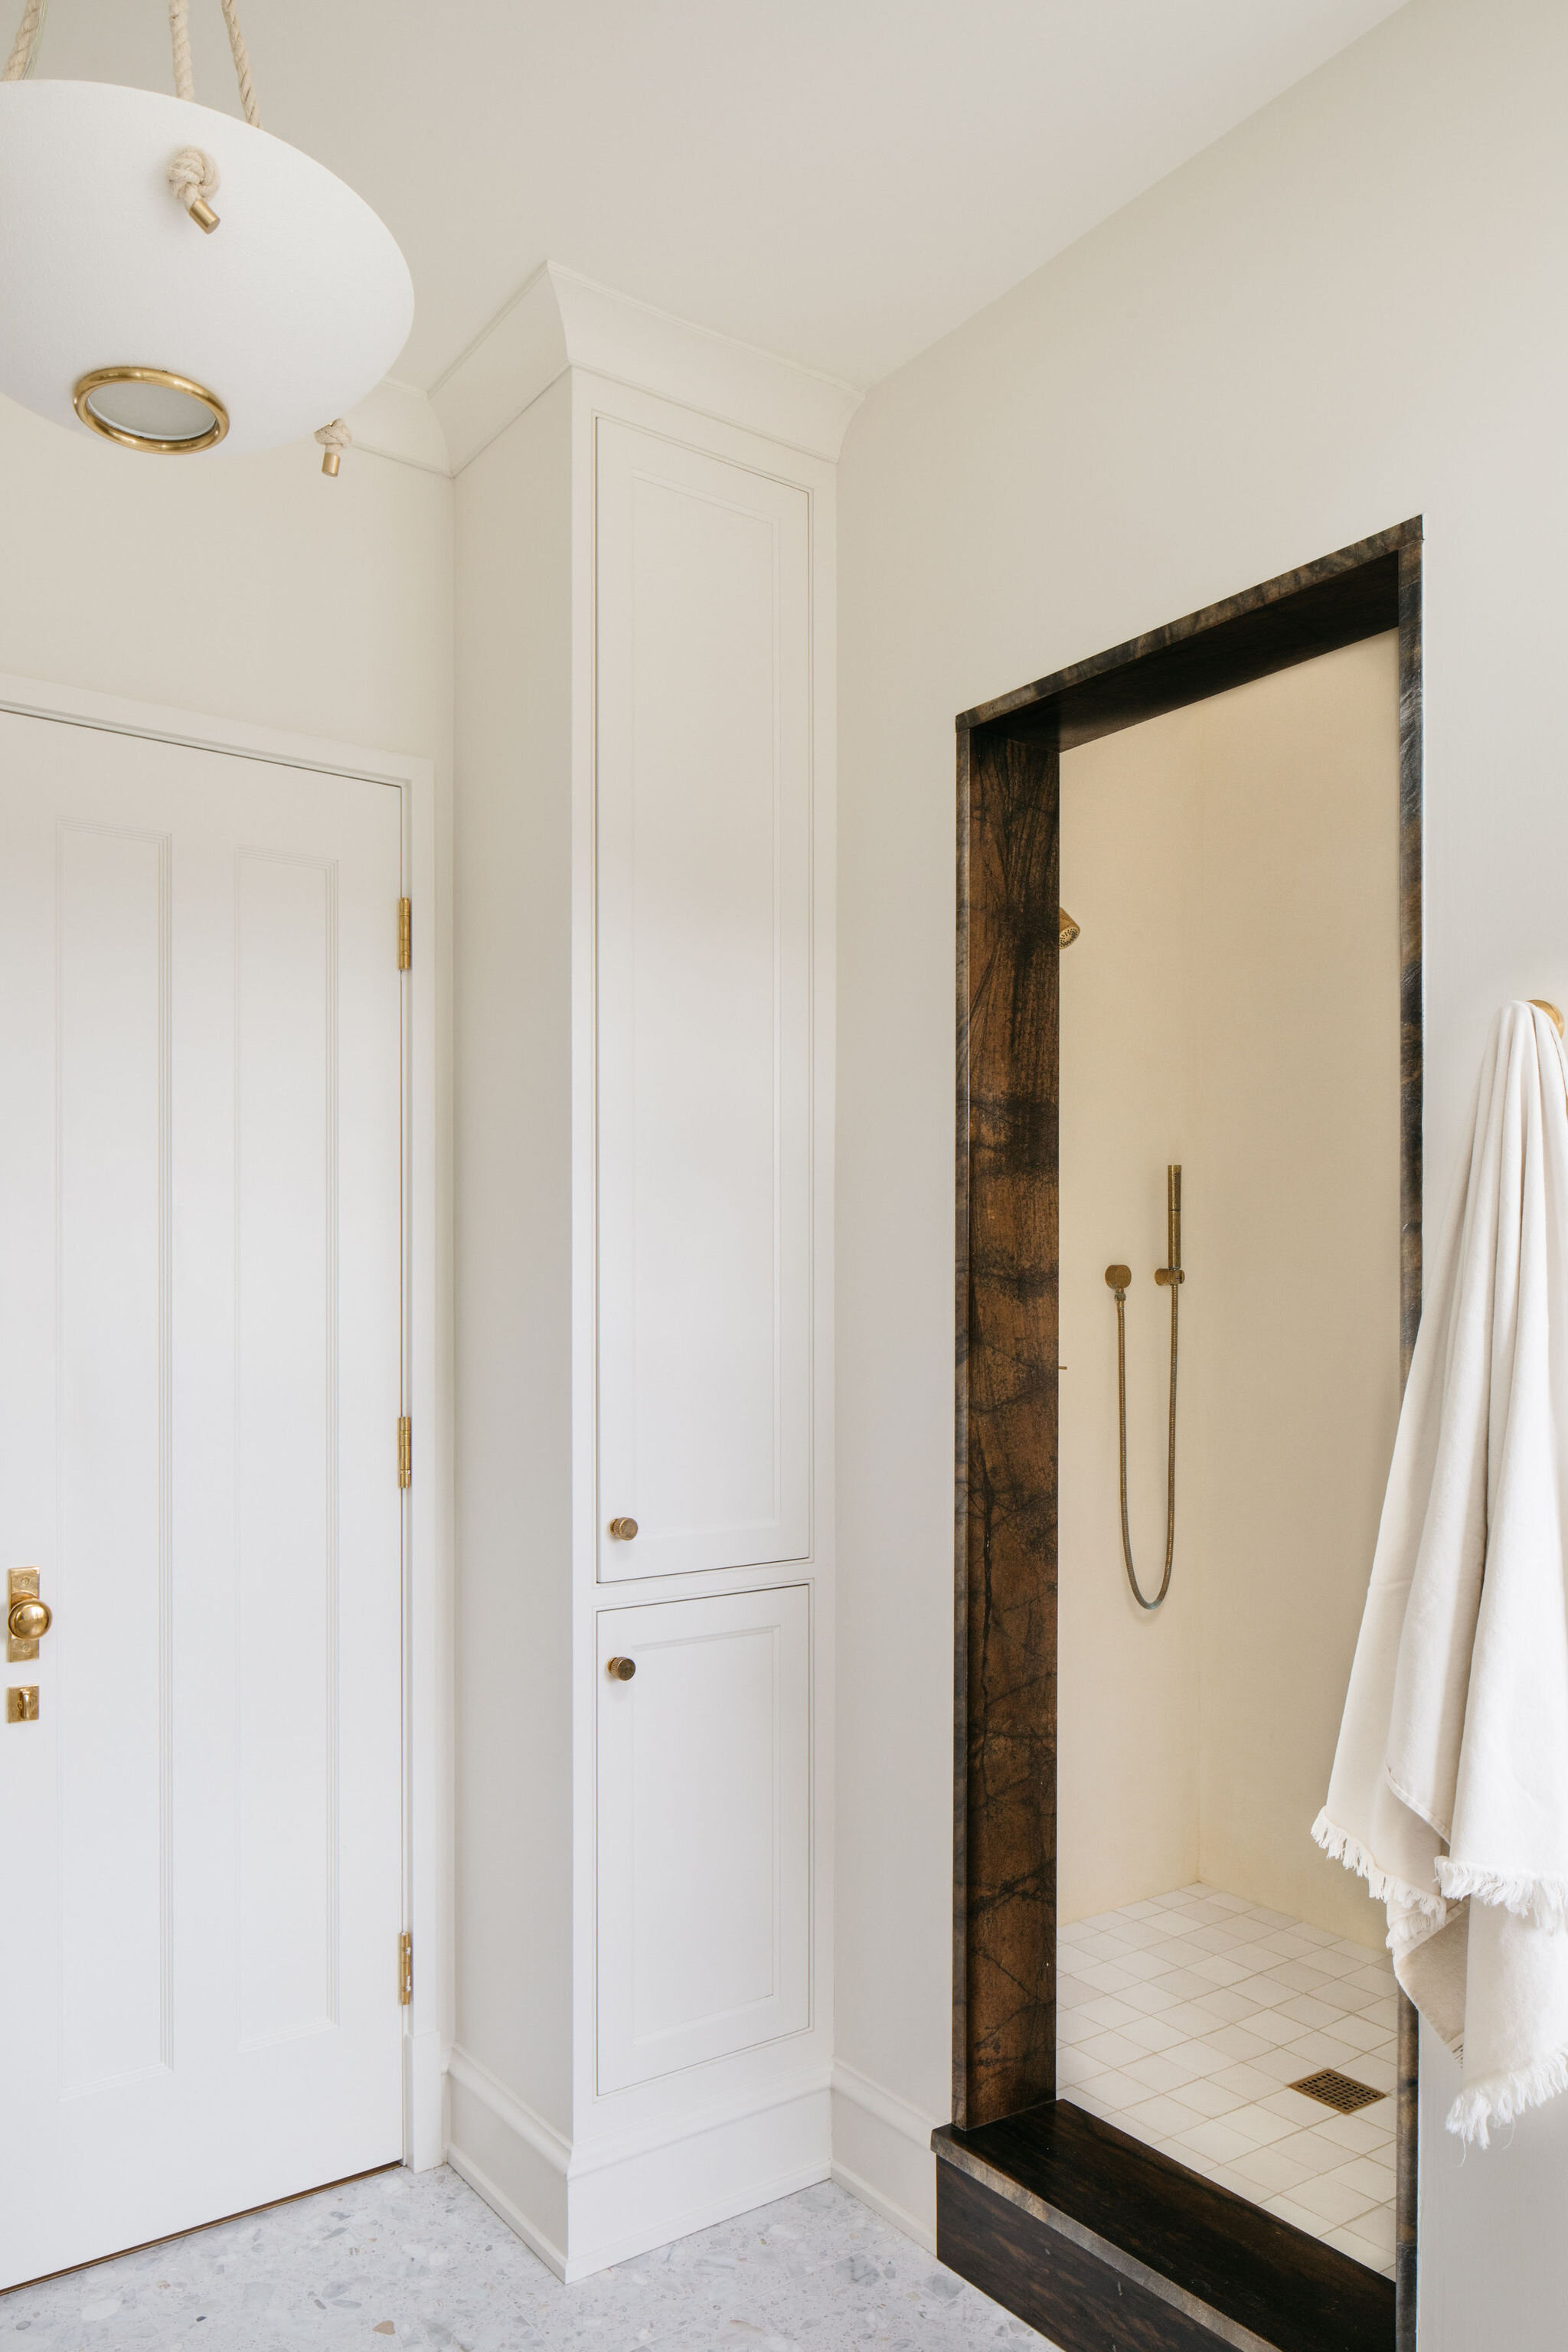 Sandstone Bath Accessories – KATE MARKER HOME